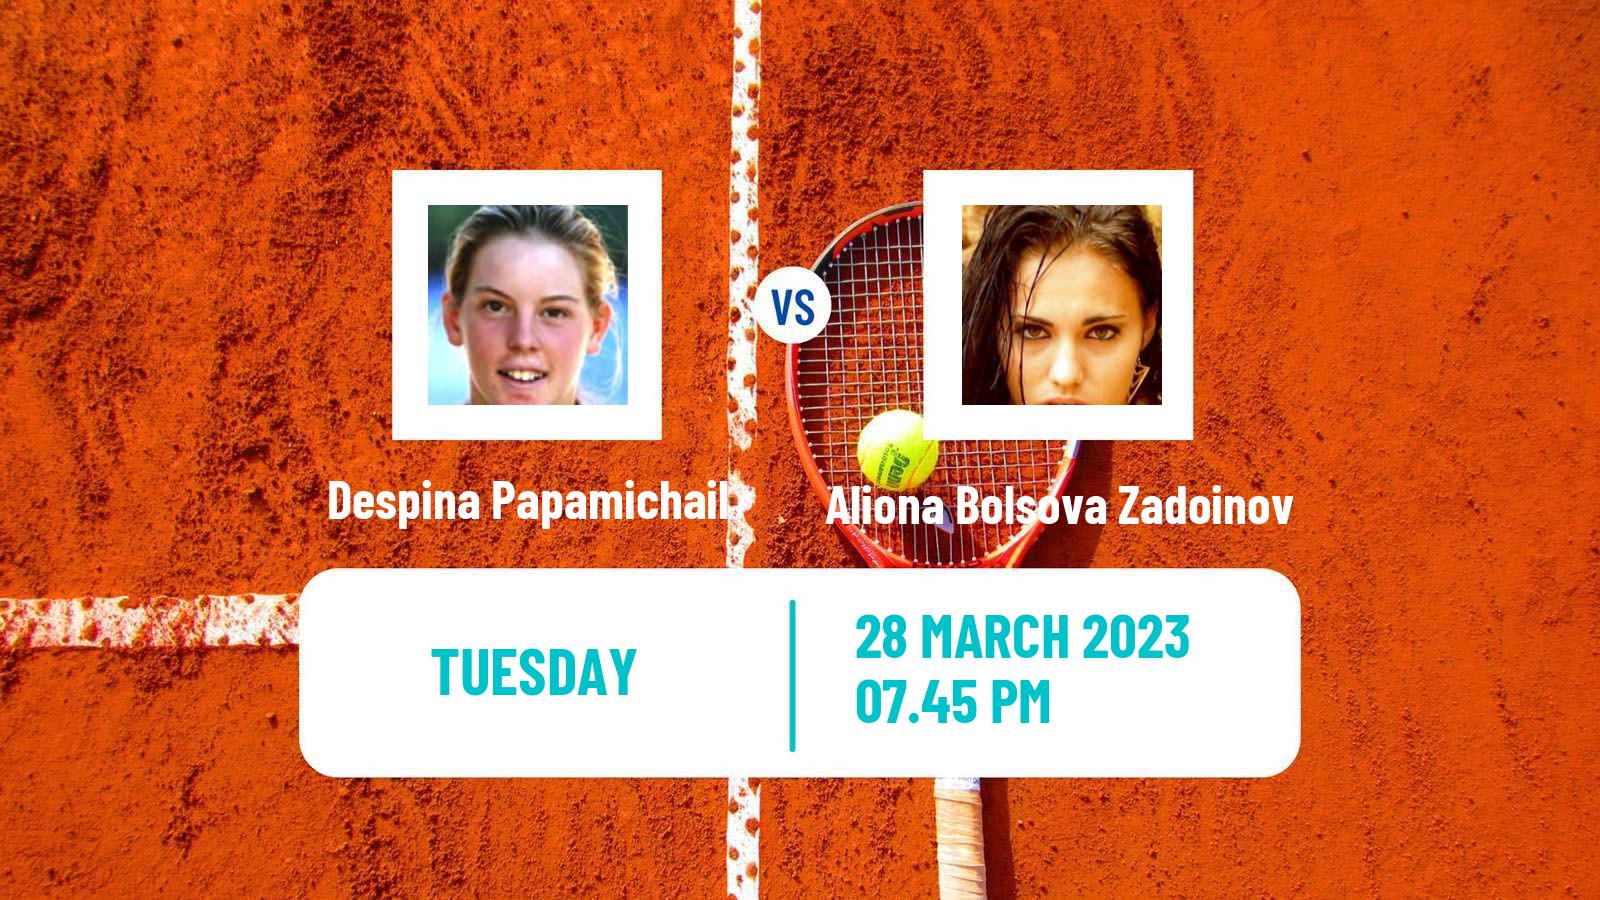 Tennis ATP Challenger Despina Papamichail - Aliona Bolsova Zadoinov